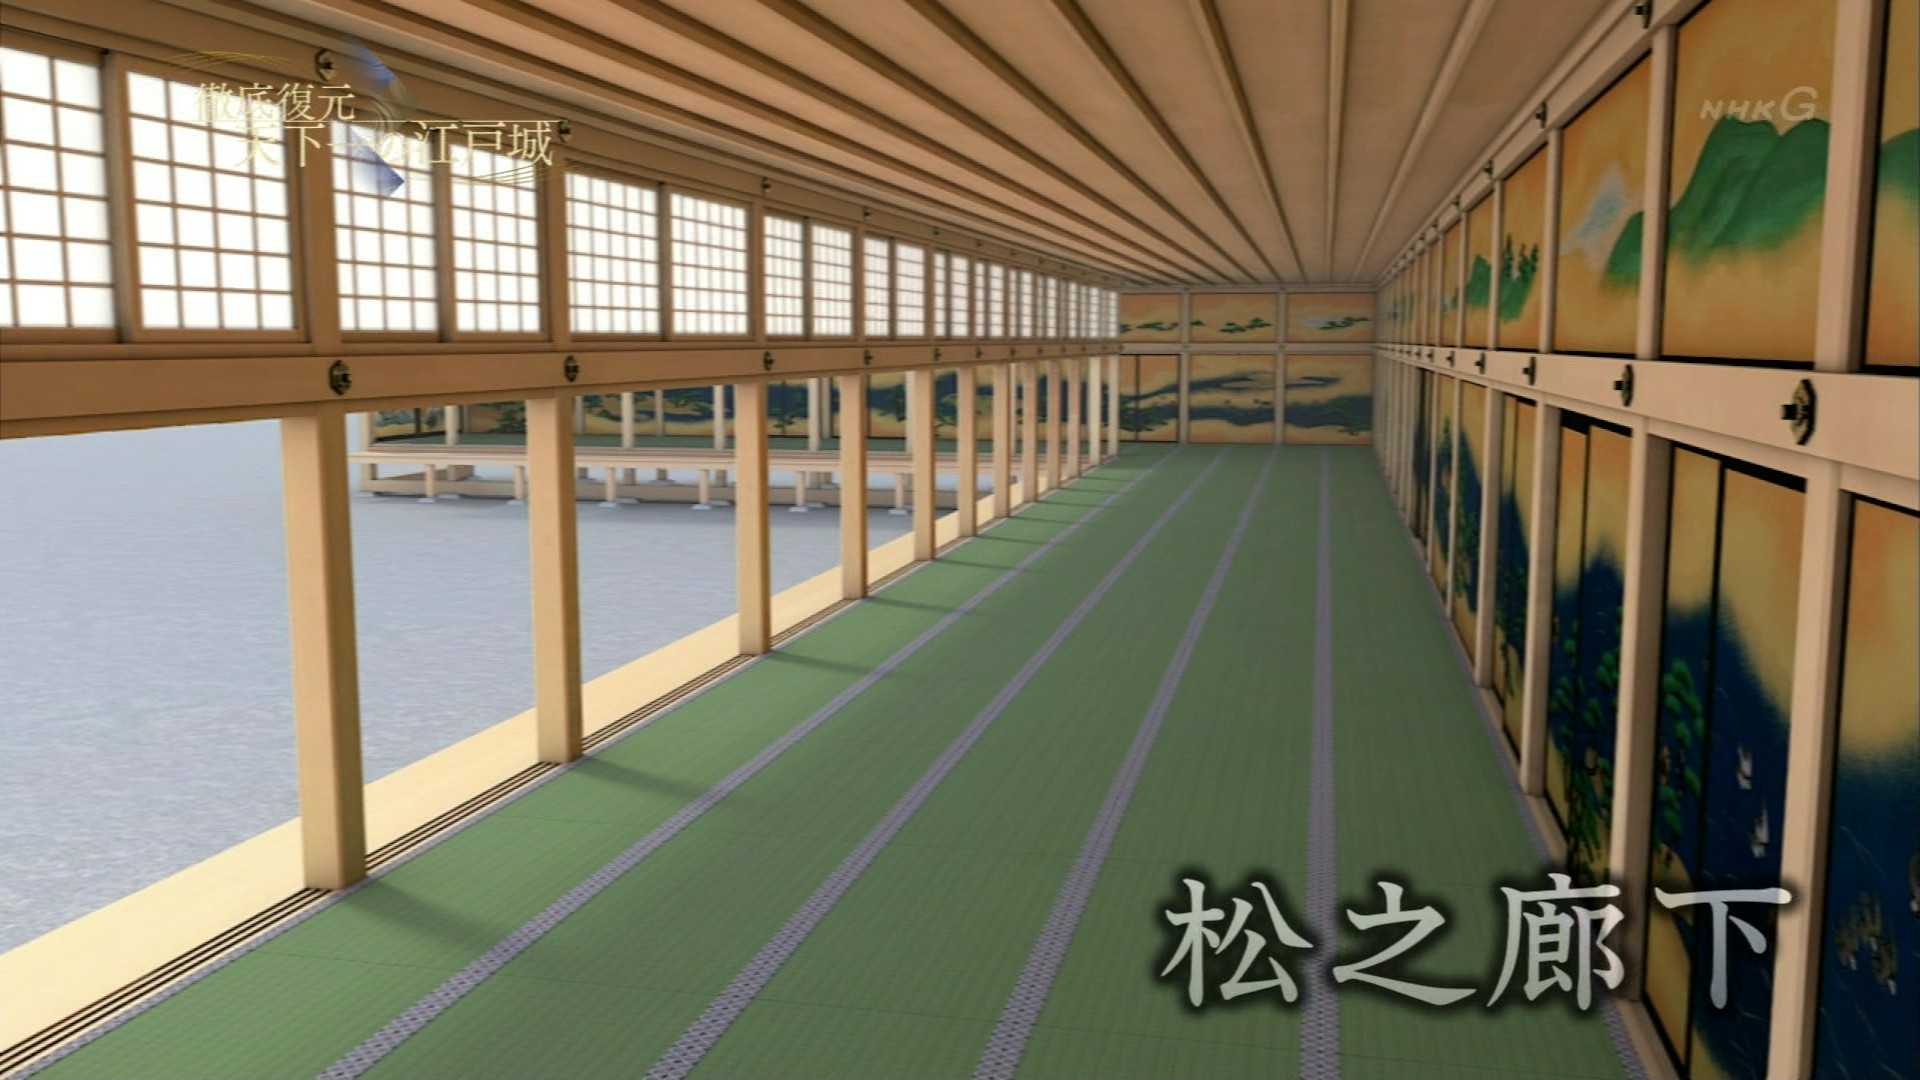 「江戸城 松の廊下」の画像検索結果